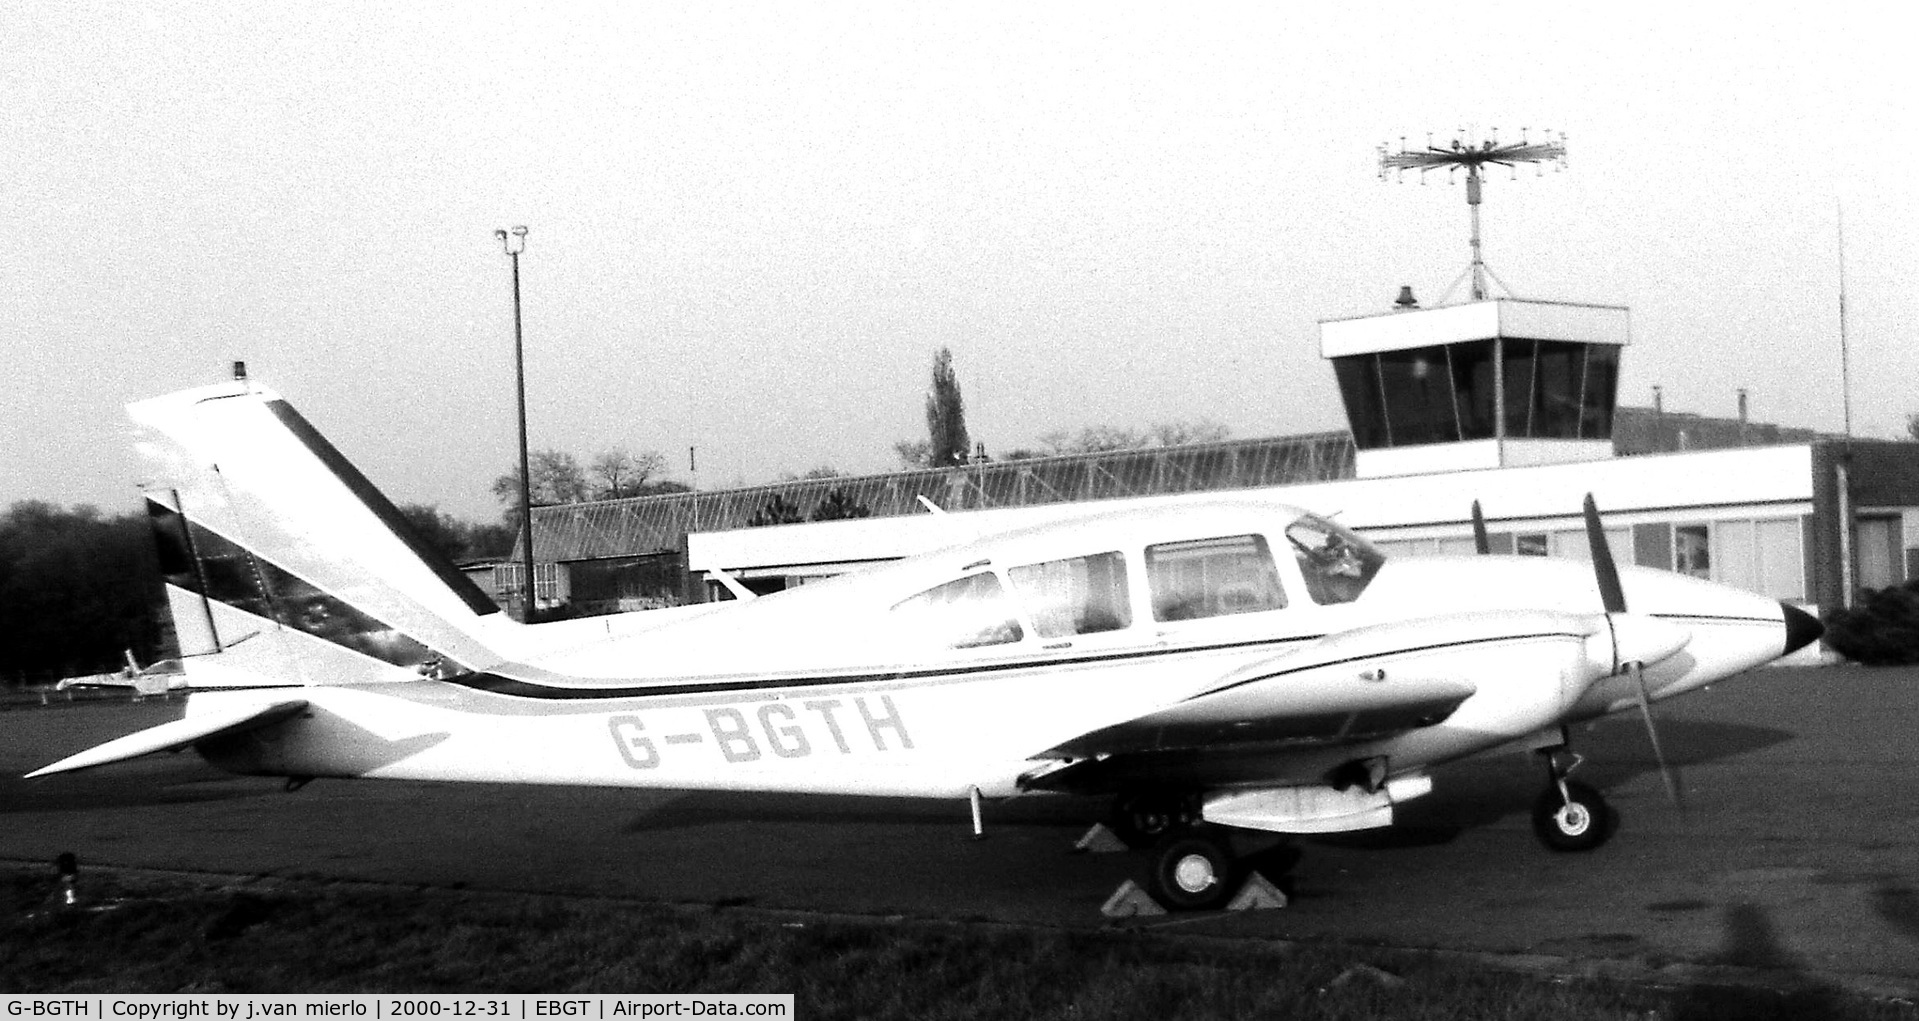 G-BGTH, 1979 Piper PA-23-250 Aztec F C/N 27-7954063, Ghent, Belgium